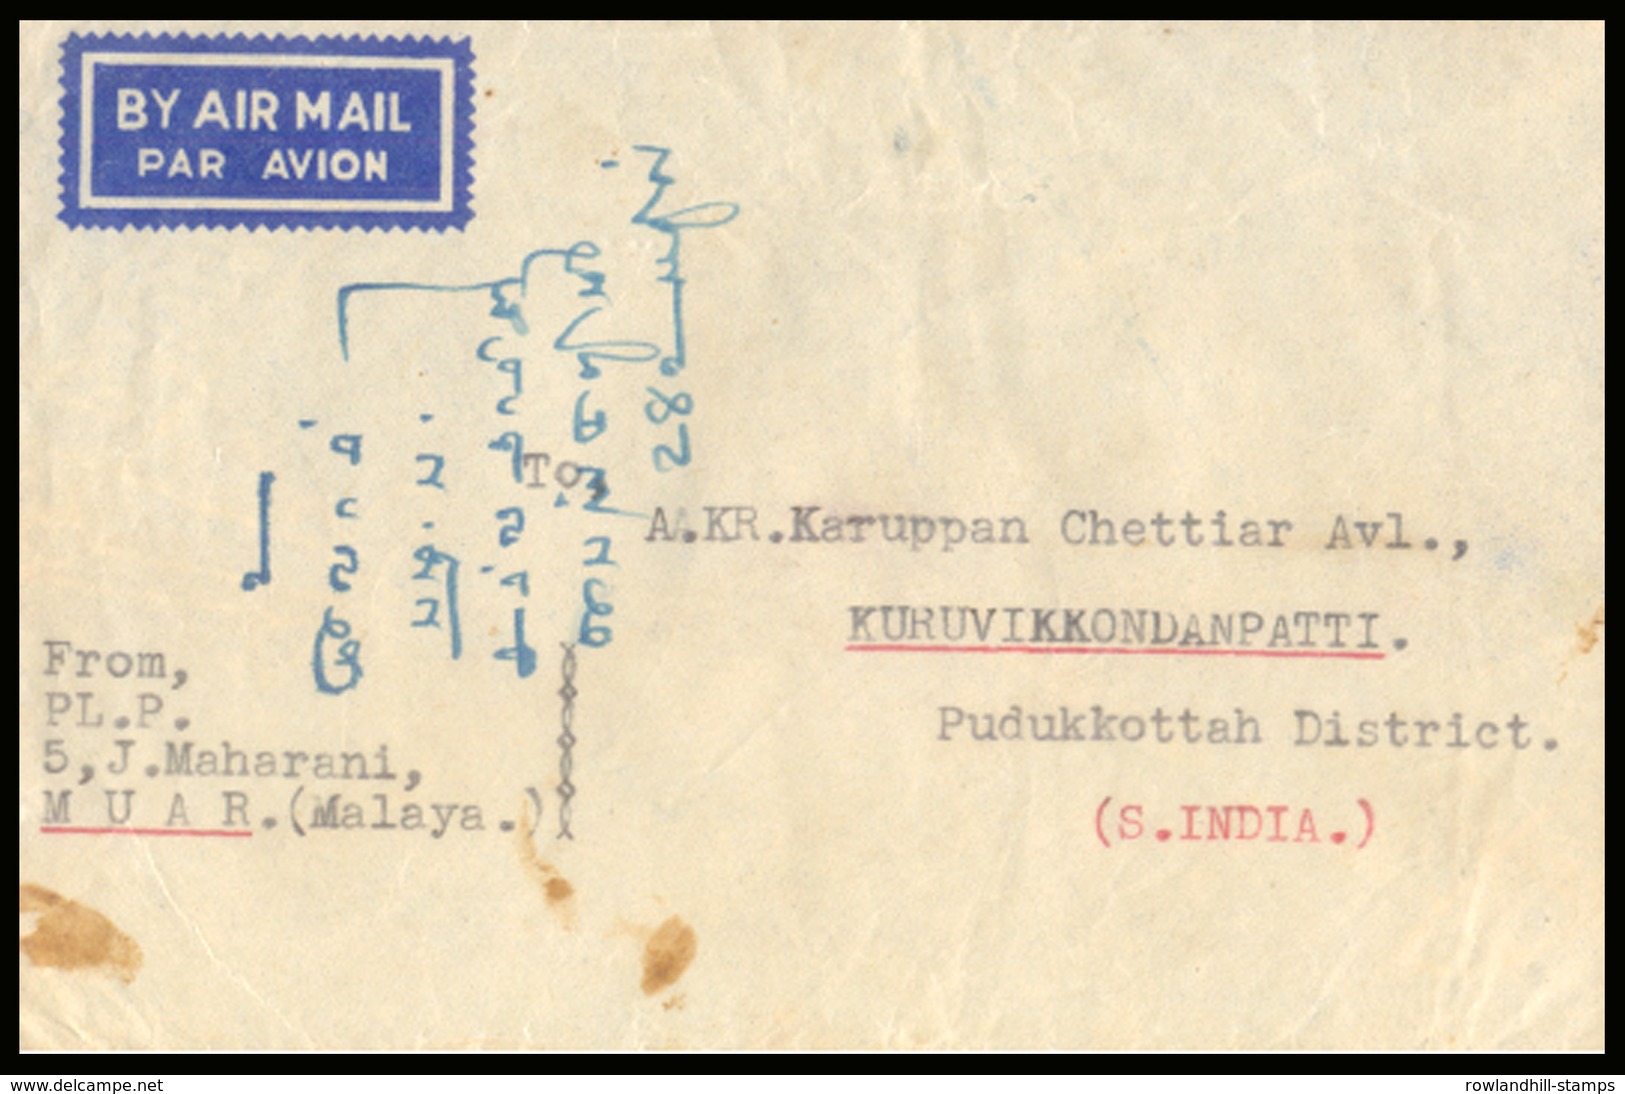 Malaya, BMA, Johore, 1949, Airmail, Sent To India, Air Mail, Various Postmark, King, Queen, Colony, British. - Malaya (British Military Administration)